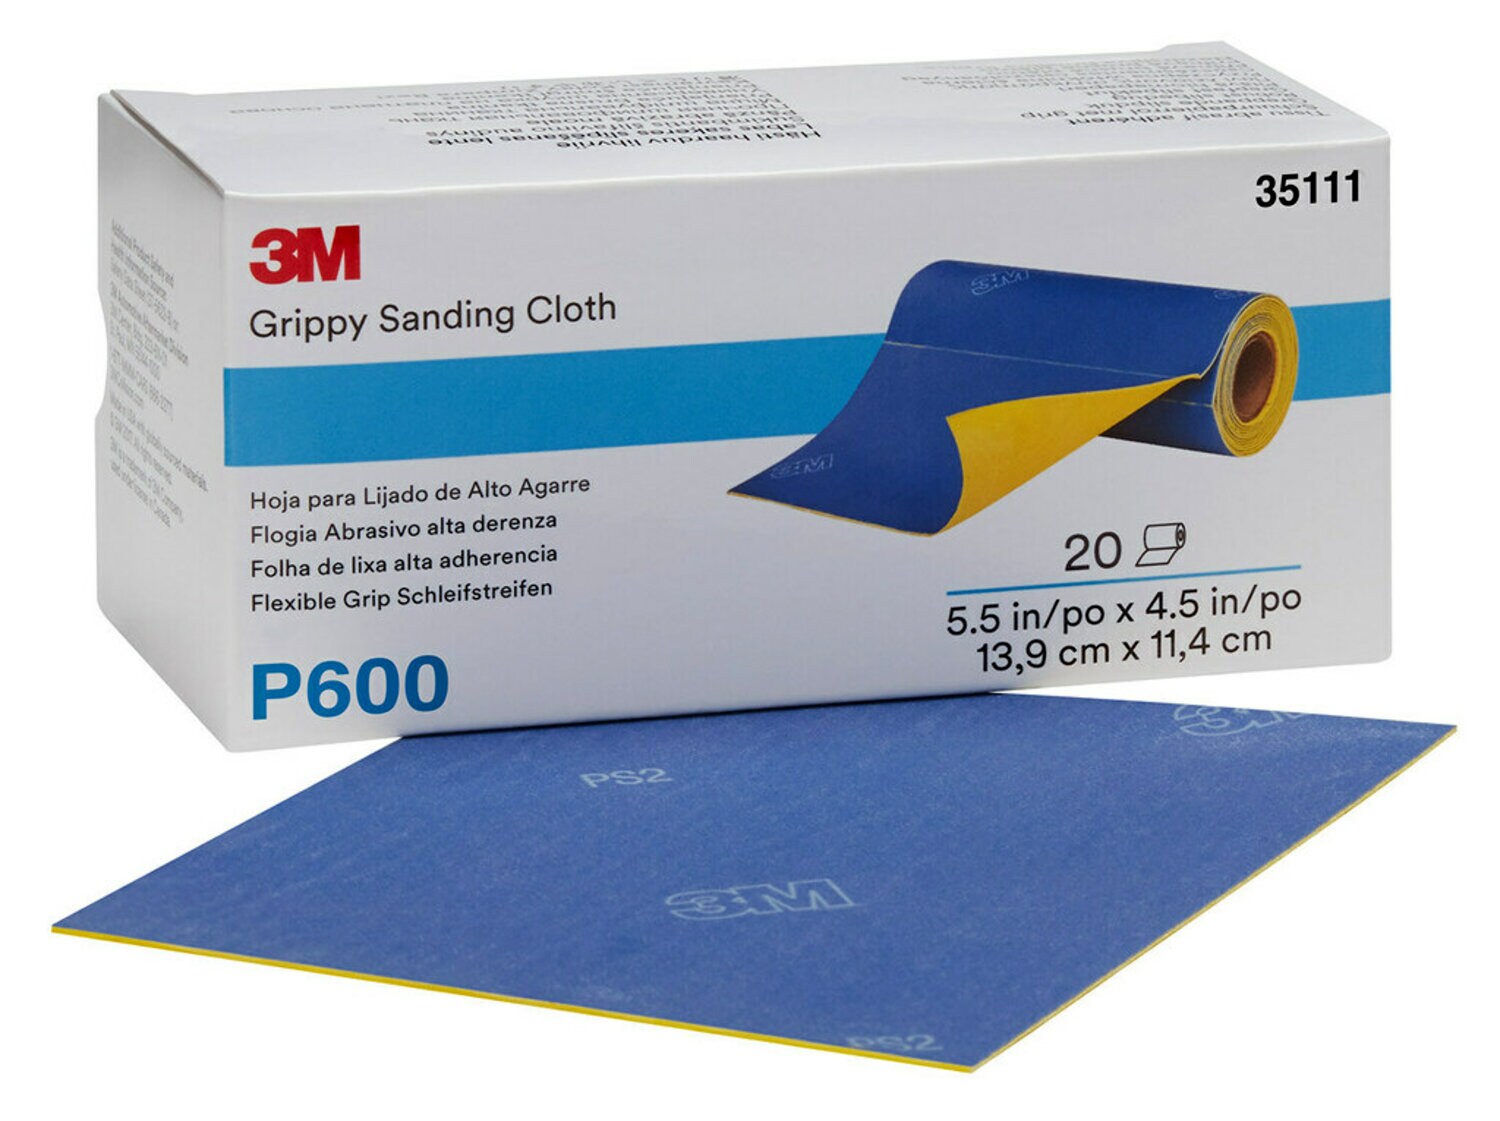 7100142933 - 3M Grippy Sanding Cloth 35111, P600 Grade, 5.5 in x 4.5 in, 20
Sheets/Roll, 4 Rolls/Case